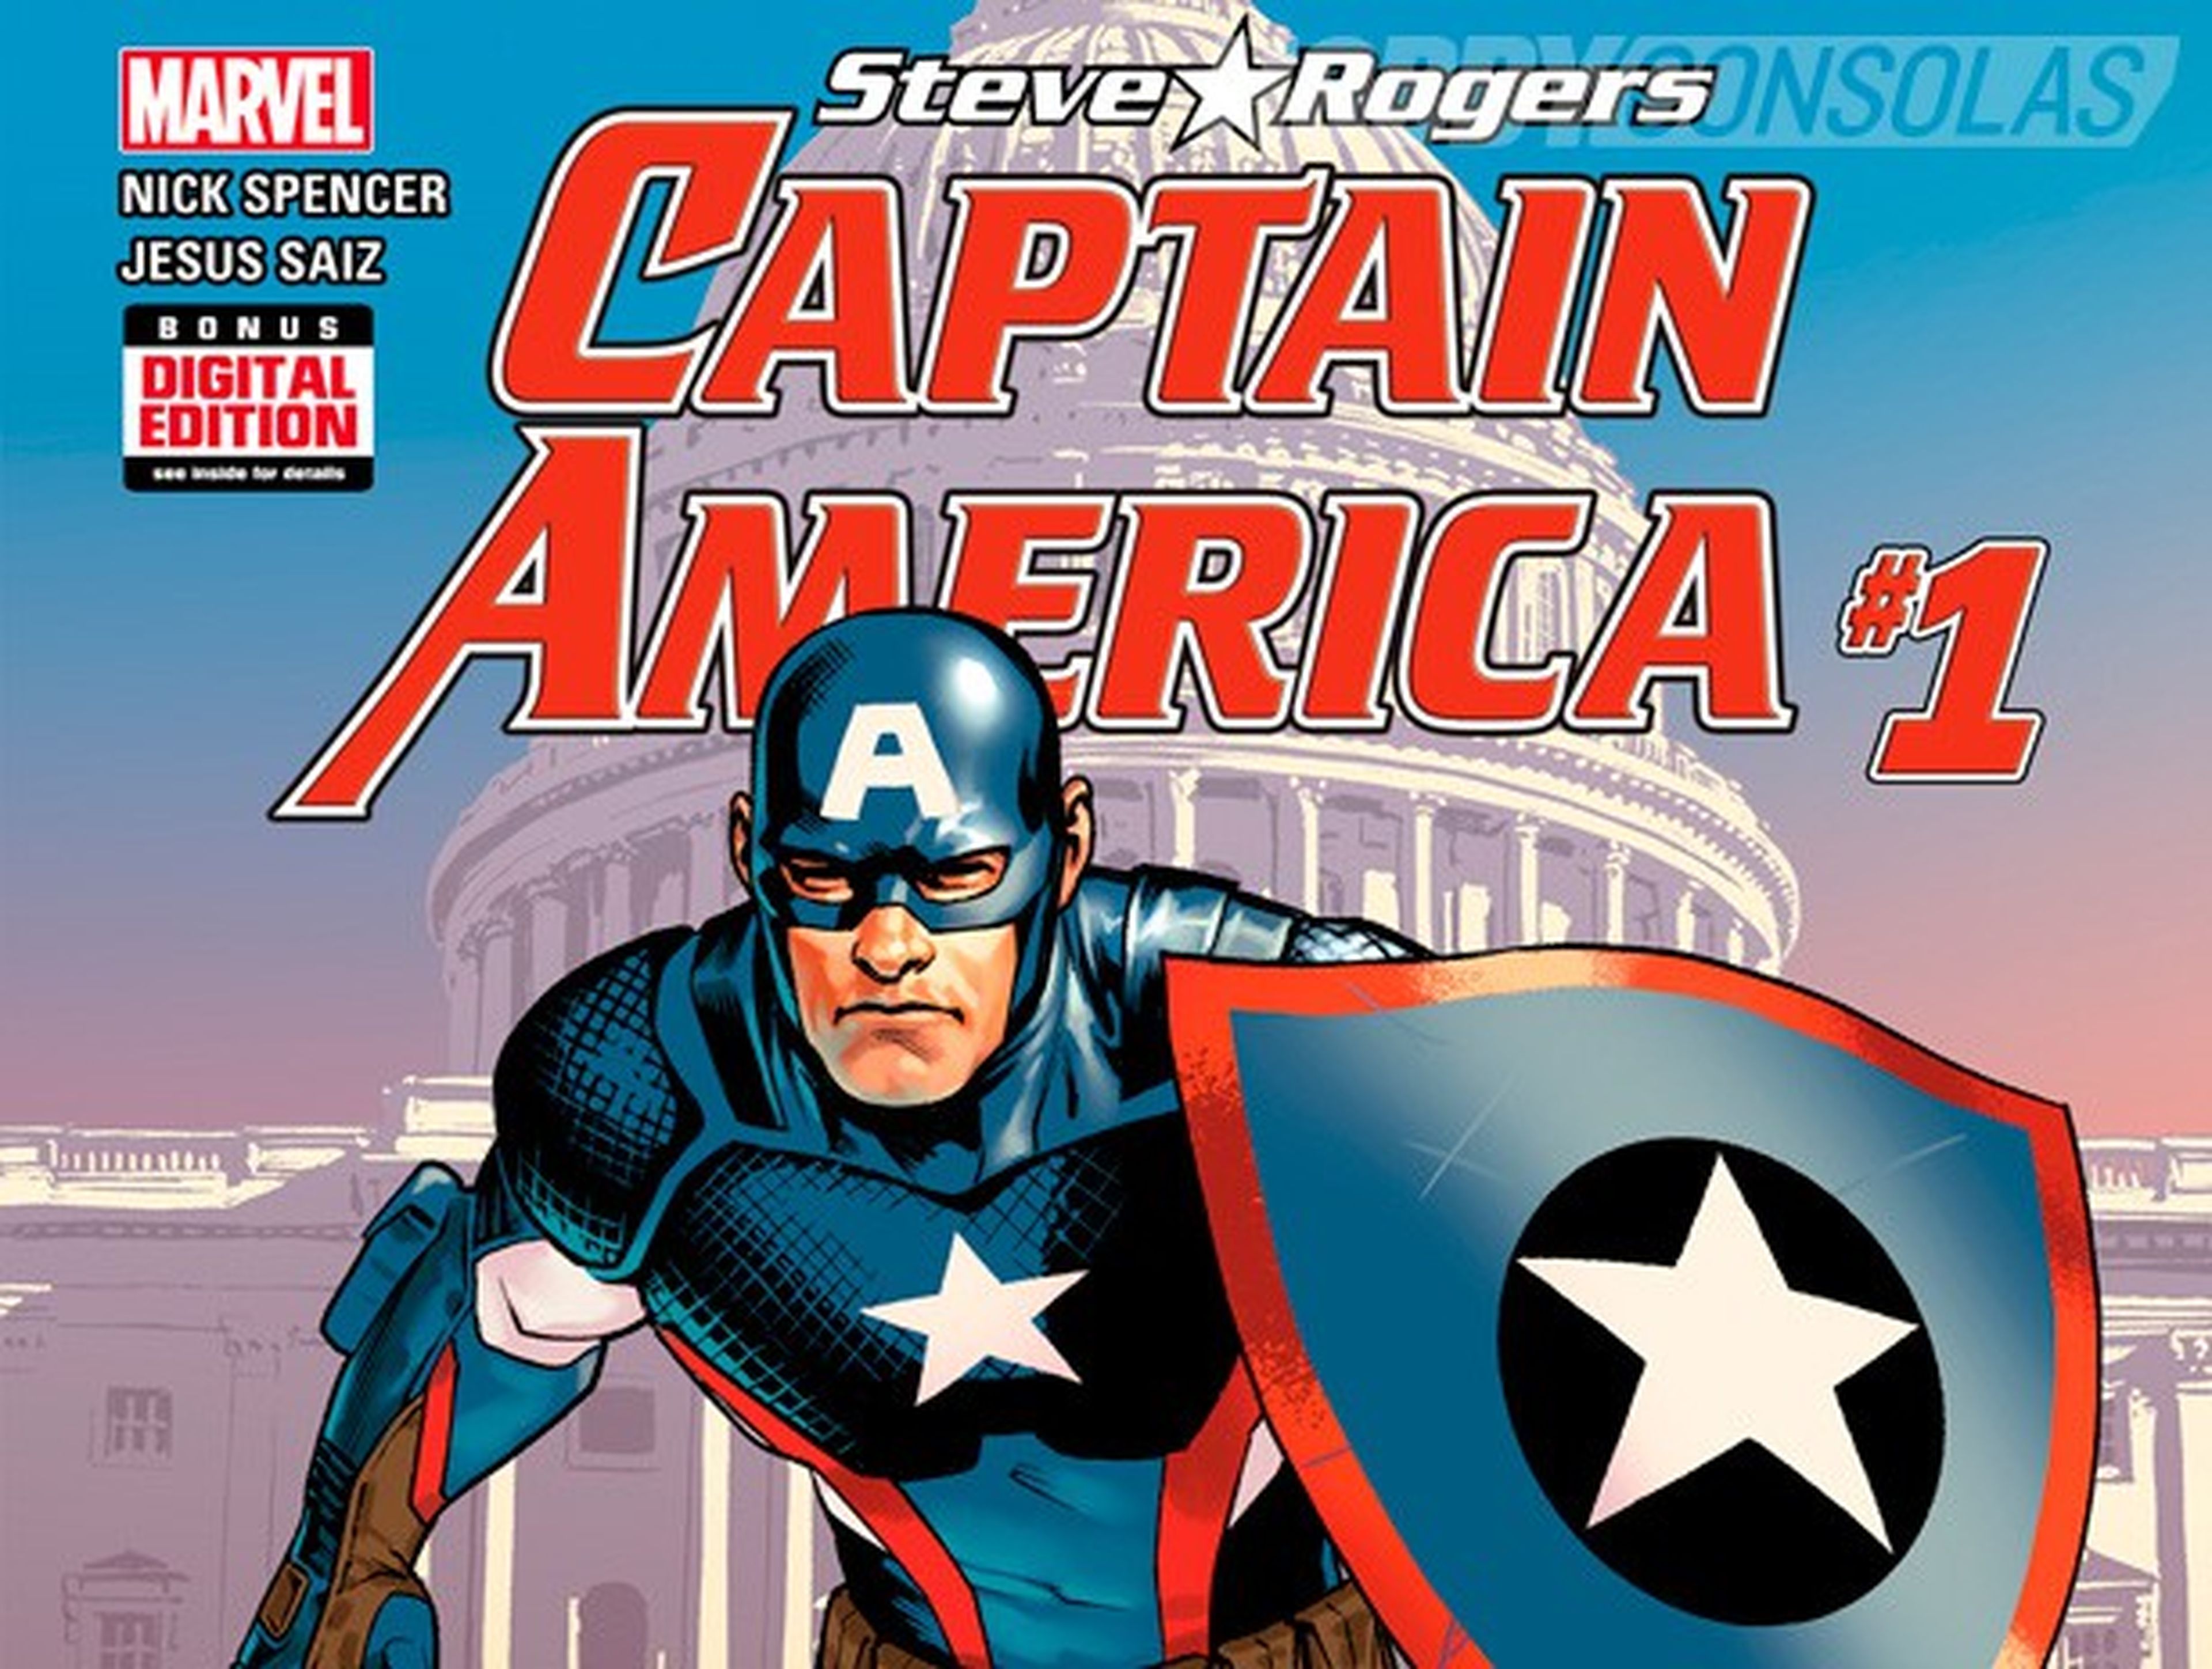 Captain America: Steve Rogers #1 revela algo impactante (SPOILER)